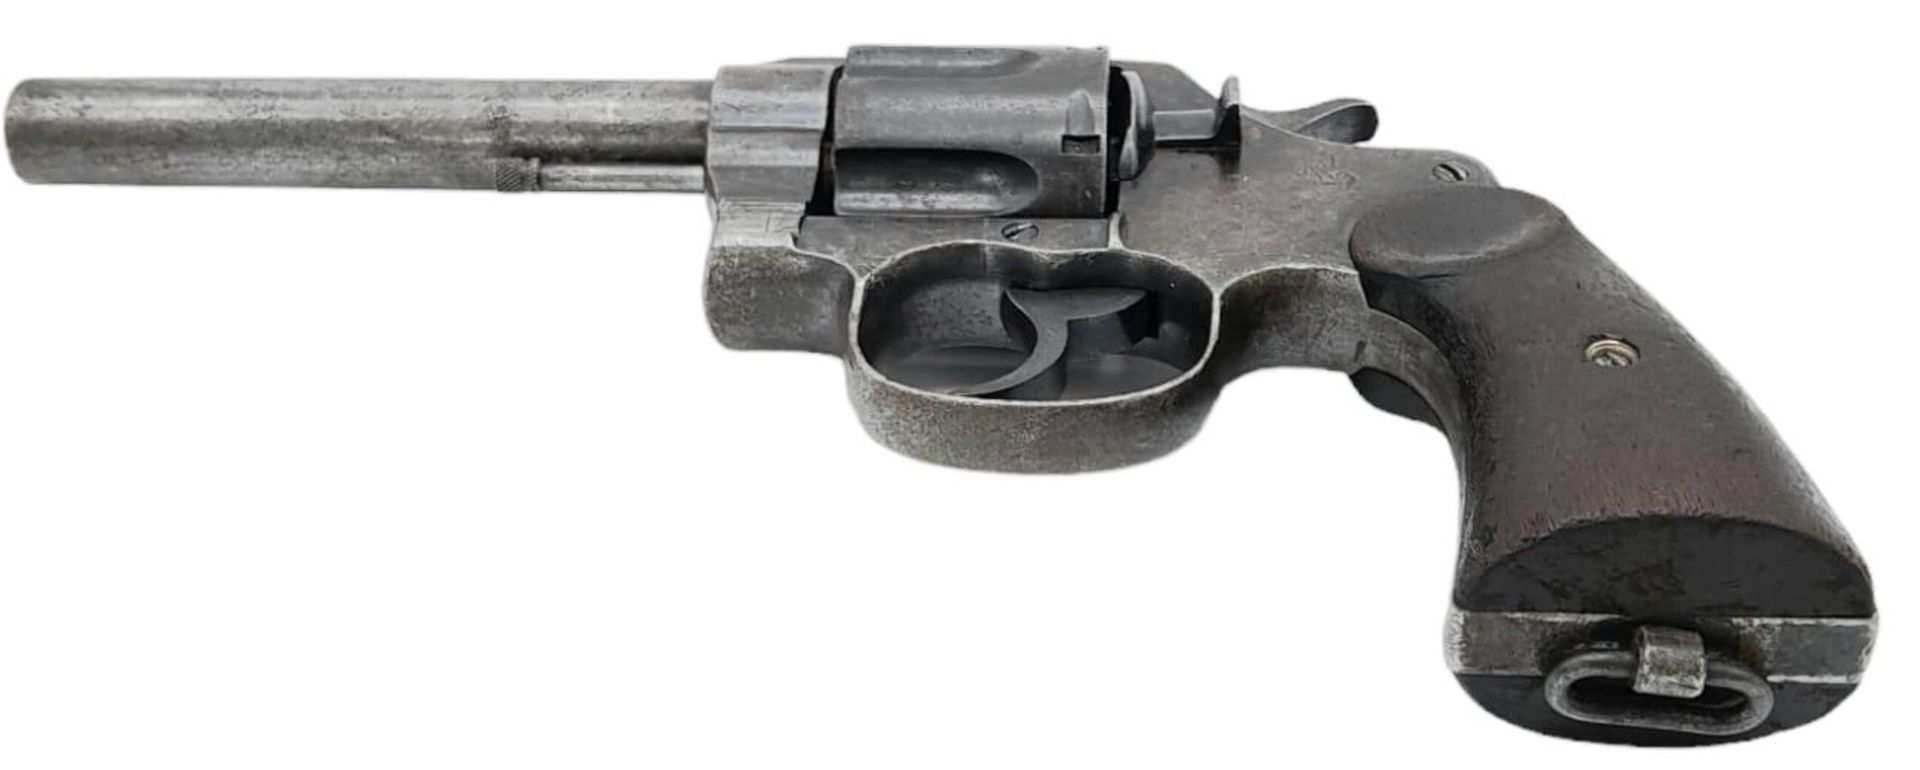 A Vintage Colt Service Revolver - 455 ELEY. This USA made pistol has a 5.5 inch barrel and battle- - Bild 8 aus 11